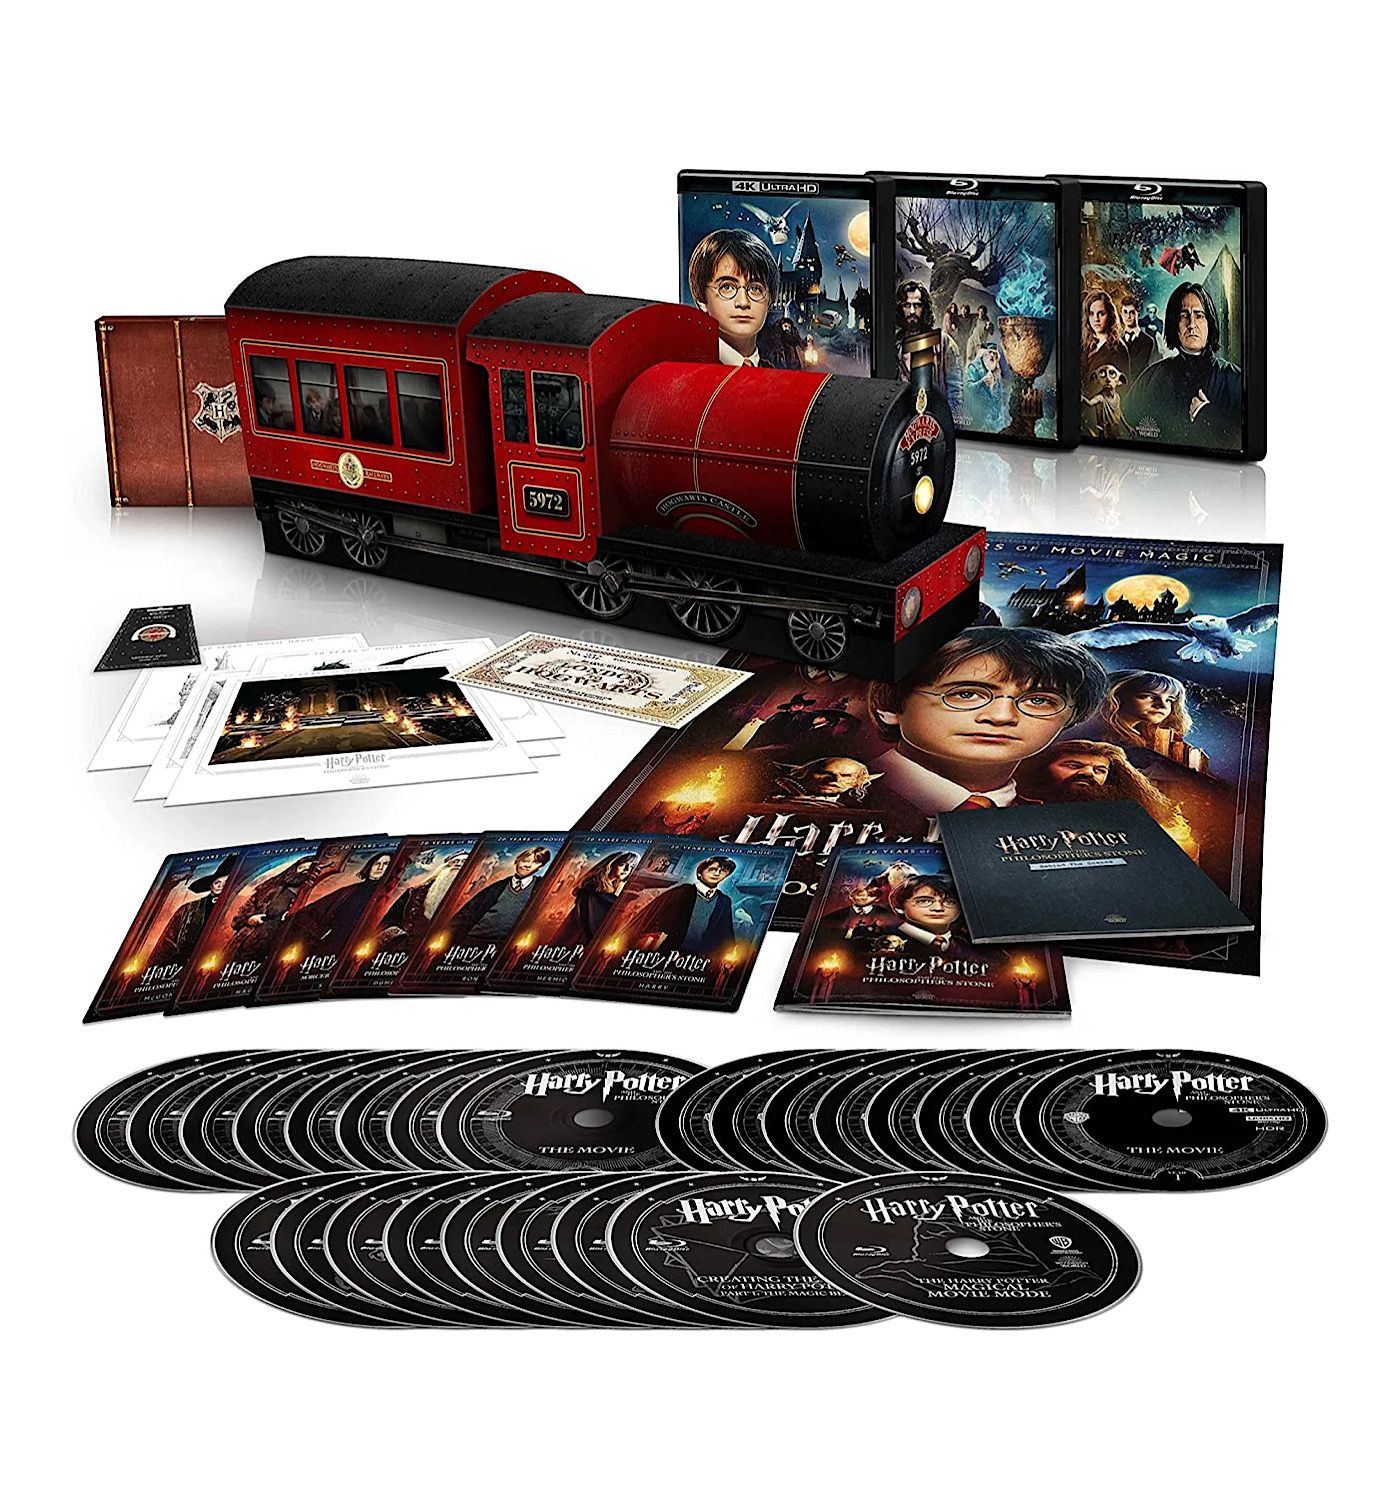 Harry Potter 4K UK Import Box Set arrived last night. Makes